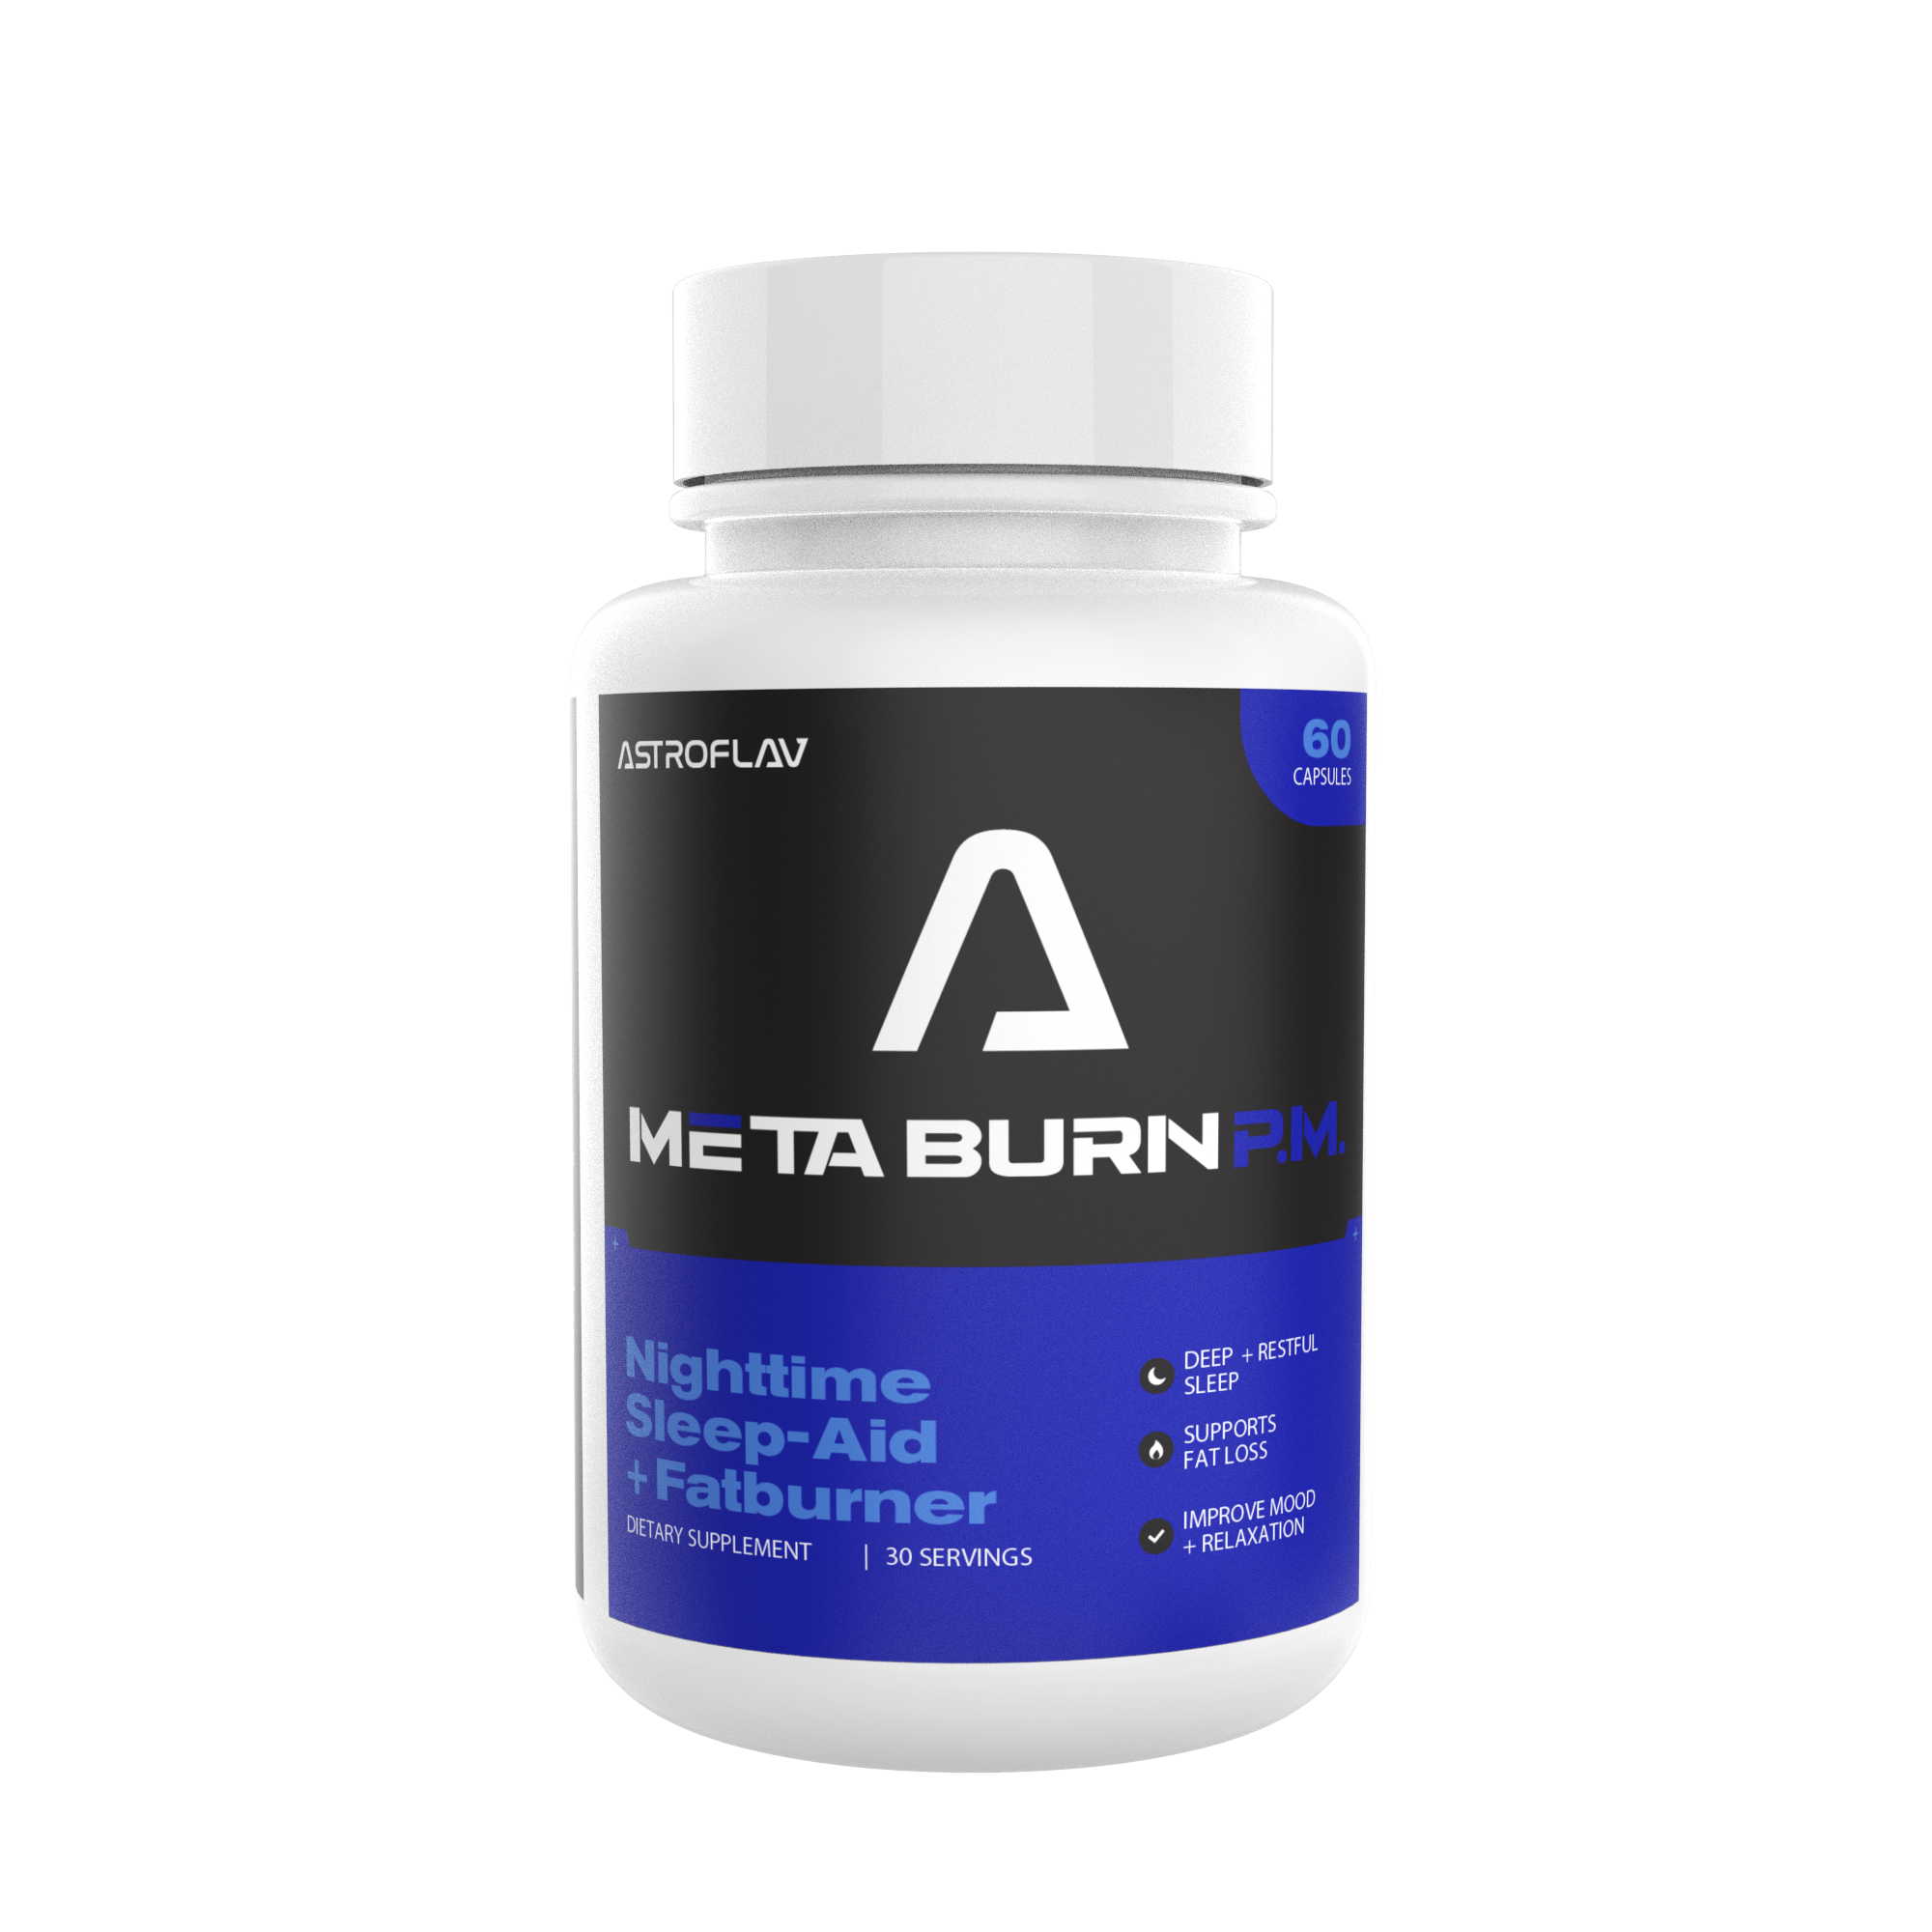 MetaBurn PM | Sleep Aid & Metabolism Support